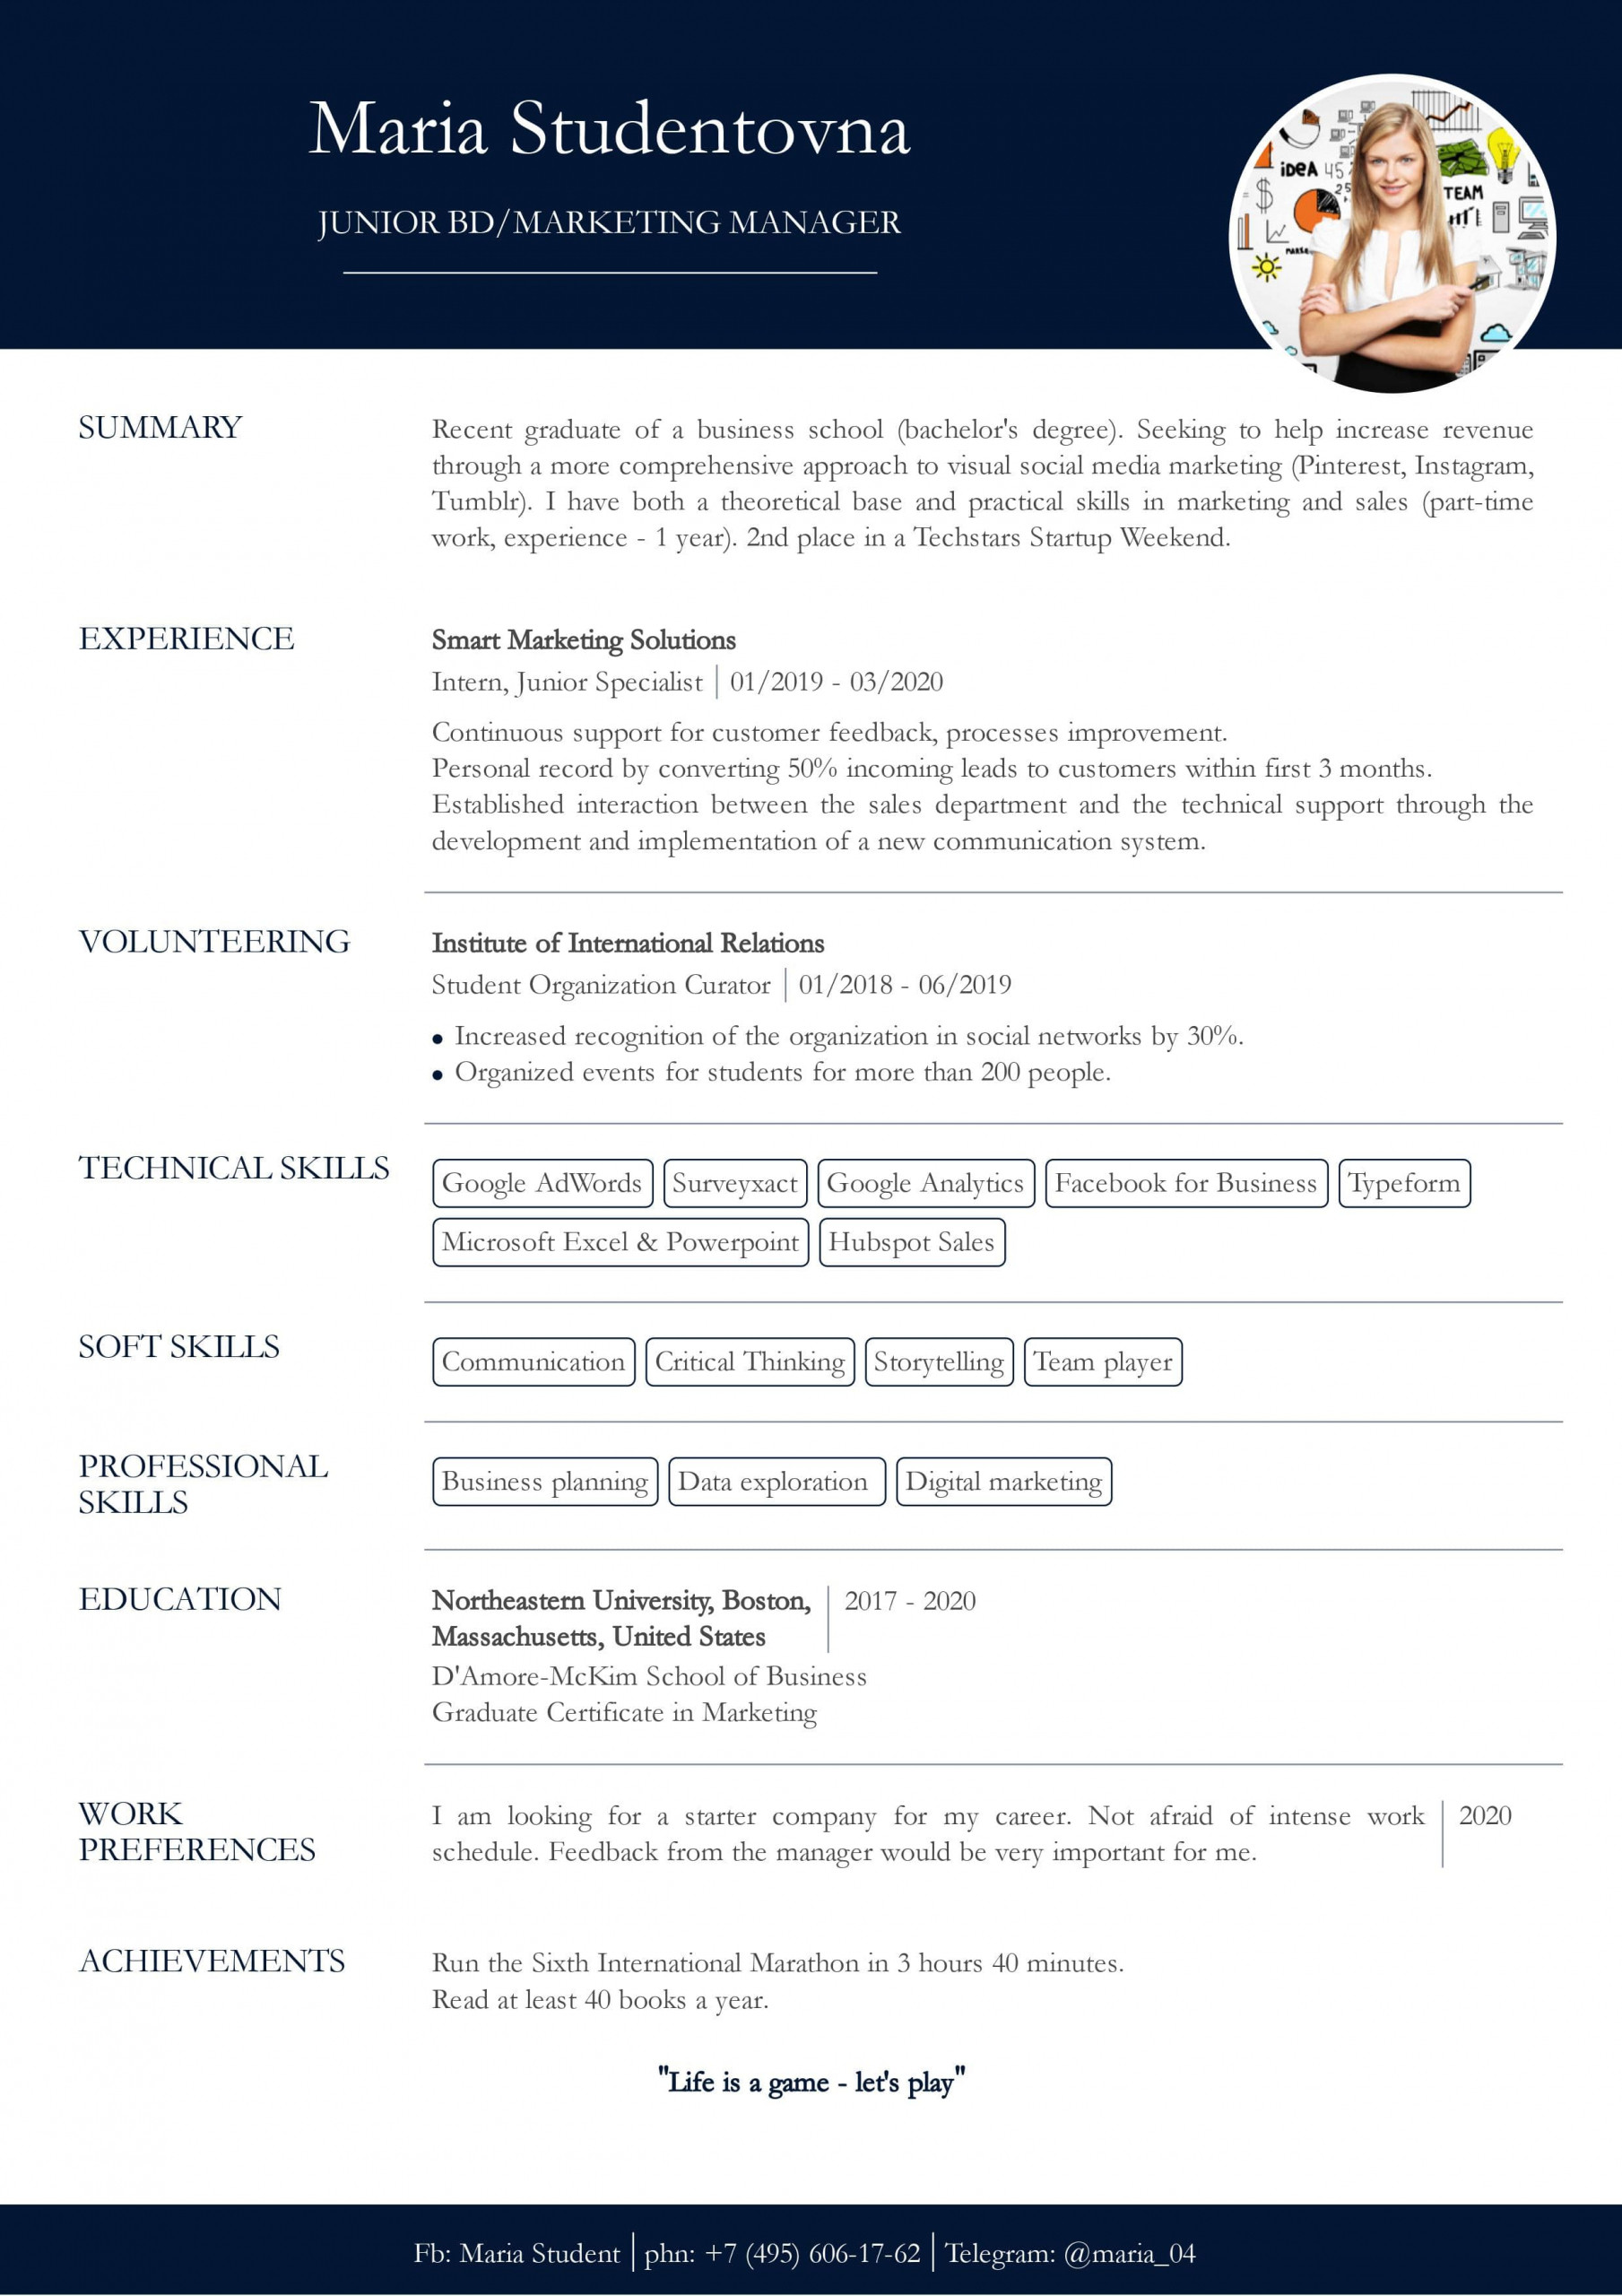 Sample Resume for School Job with No Experience Resume with No Work Experience. Sample for Students. – Cv2you Blog